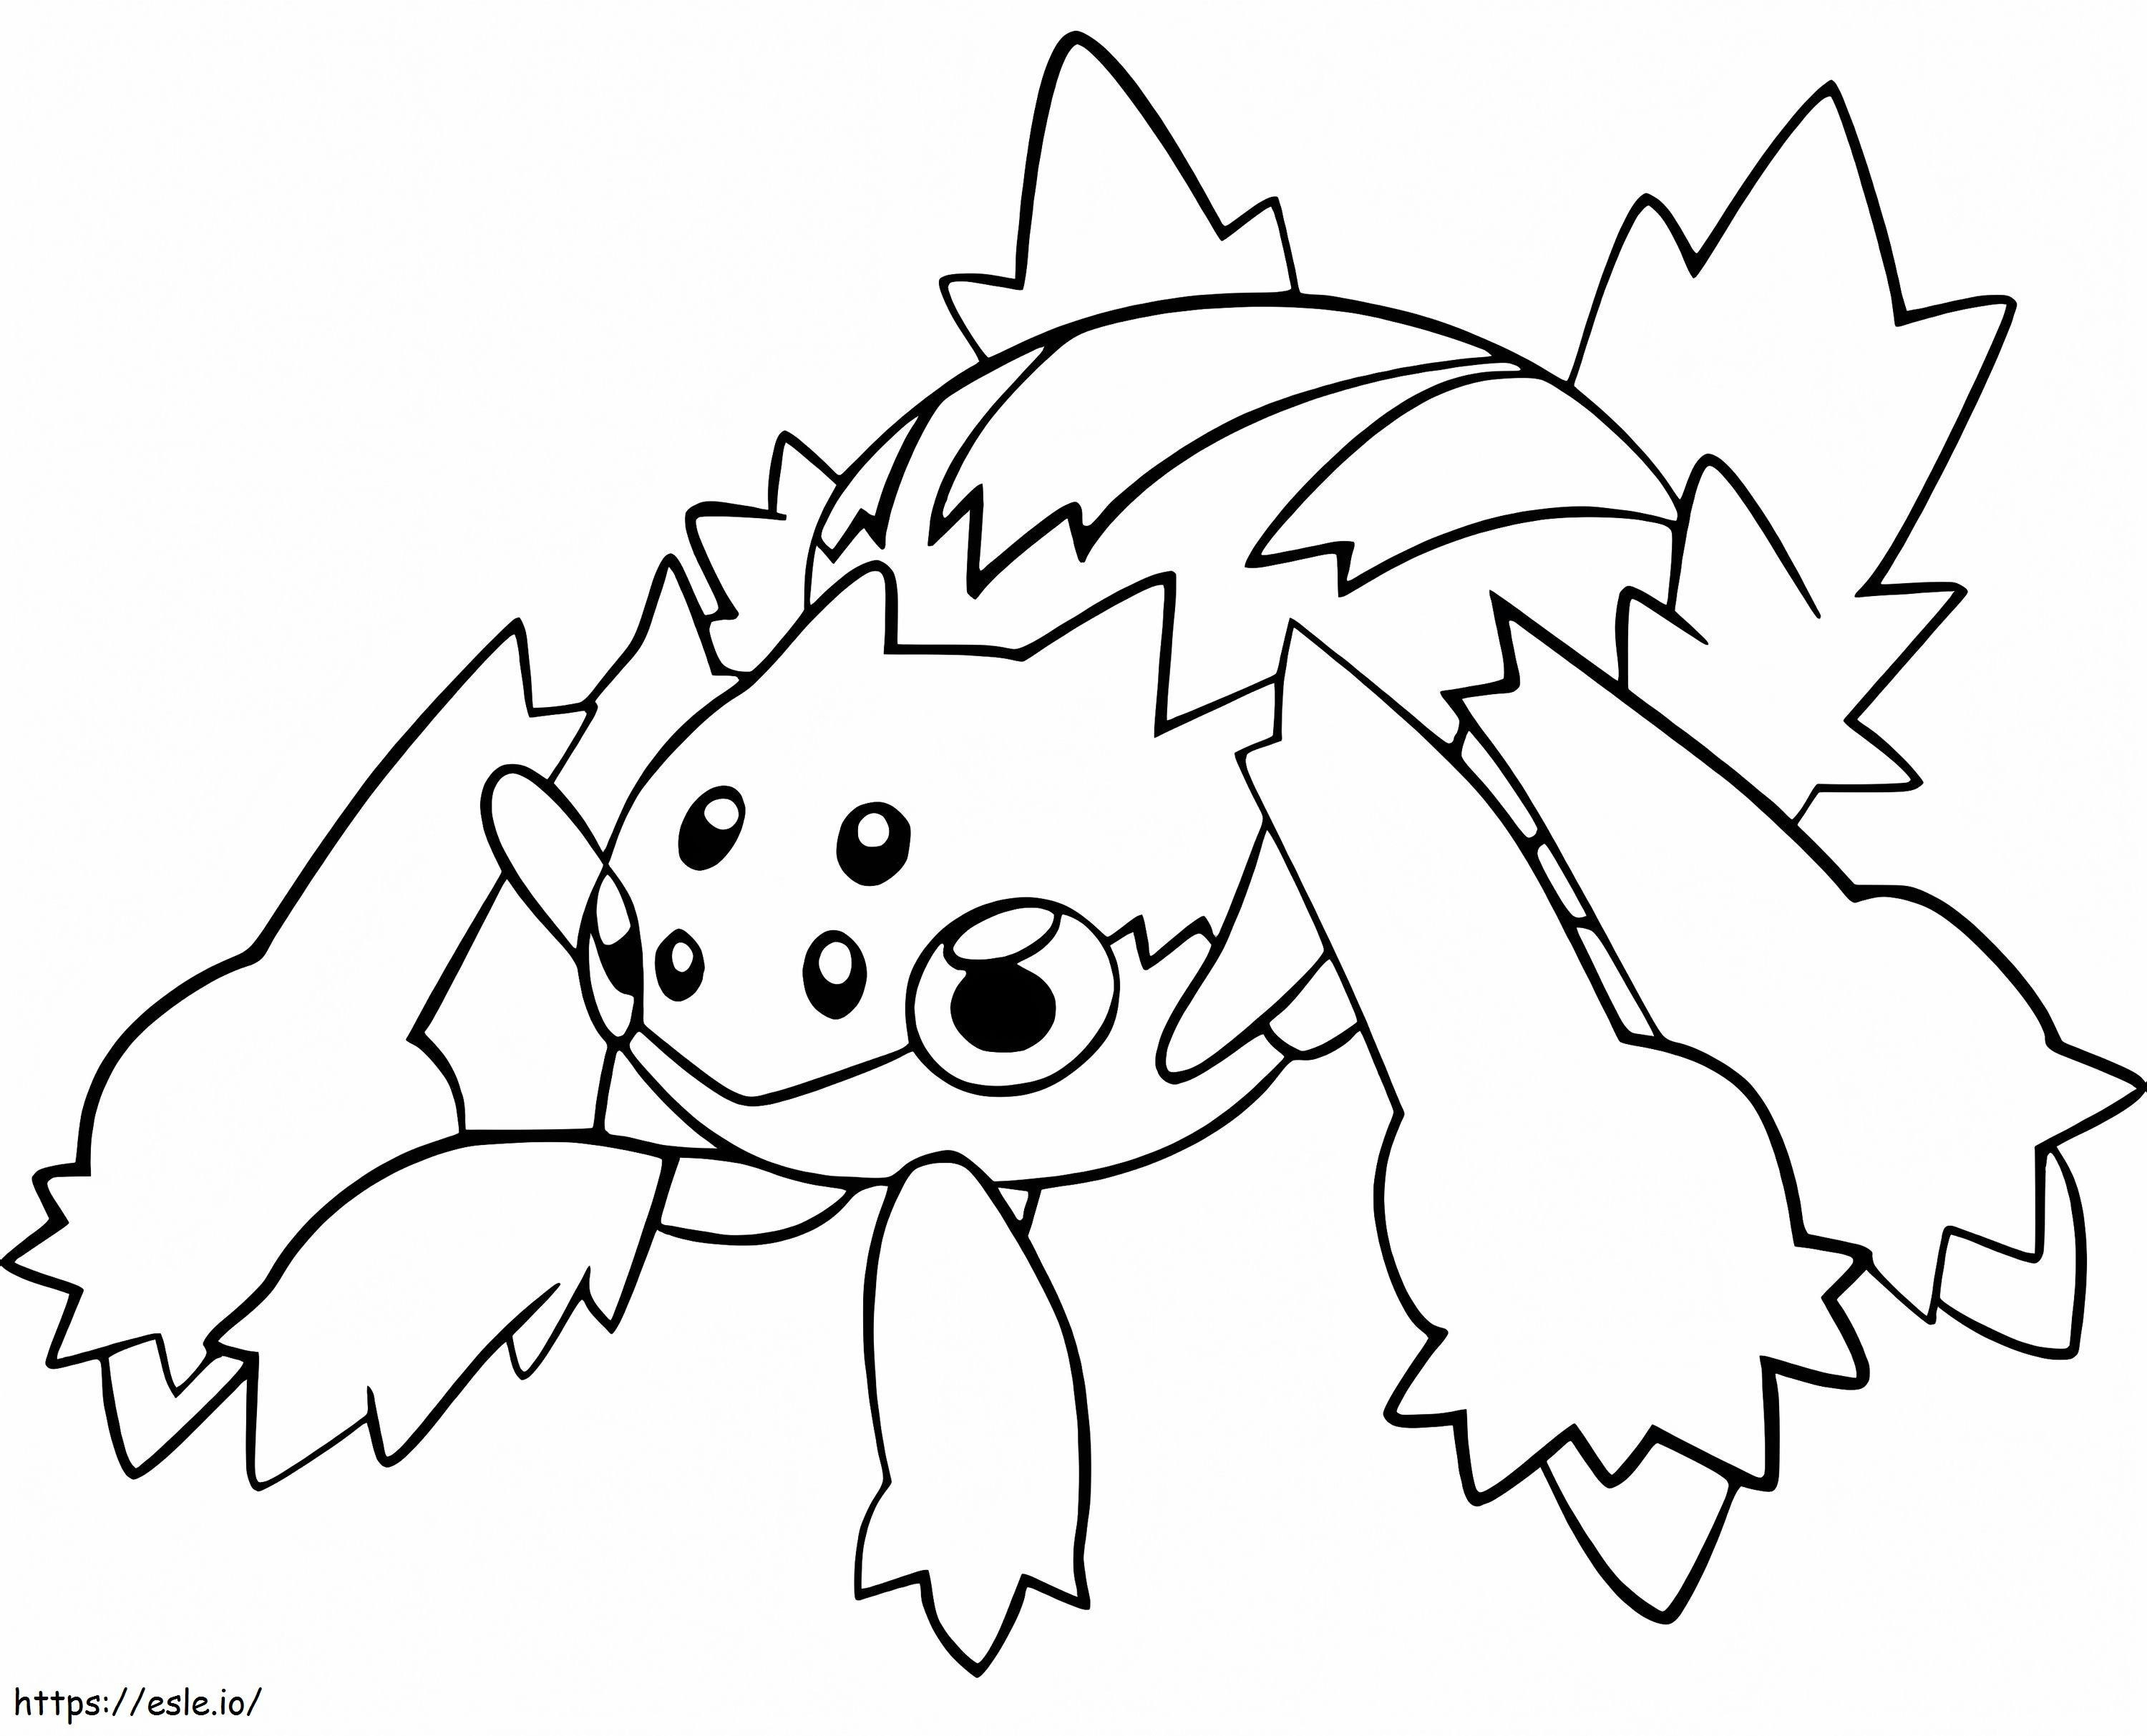 Galvantula Pokemon coloring page